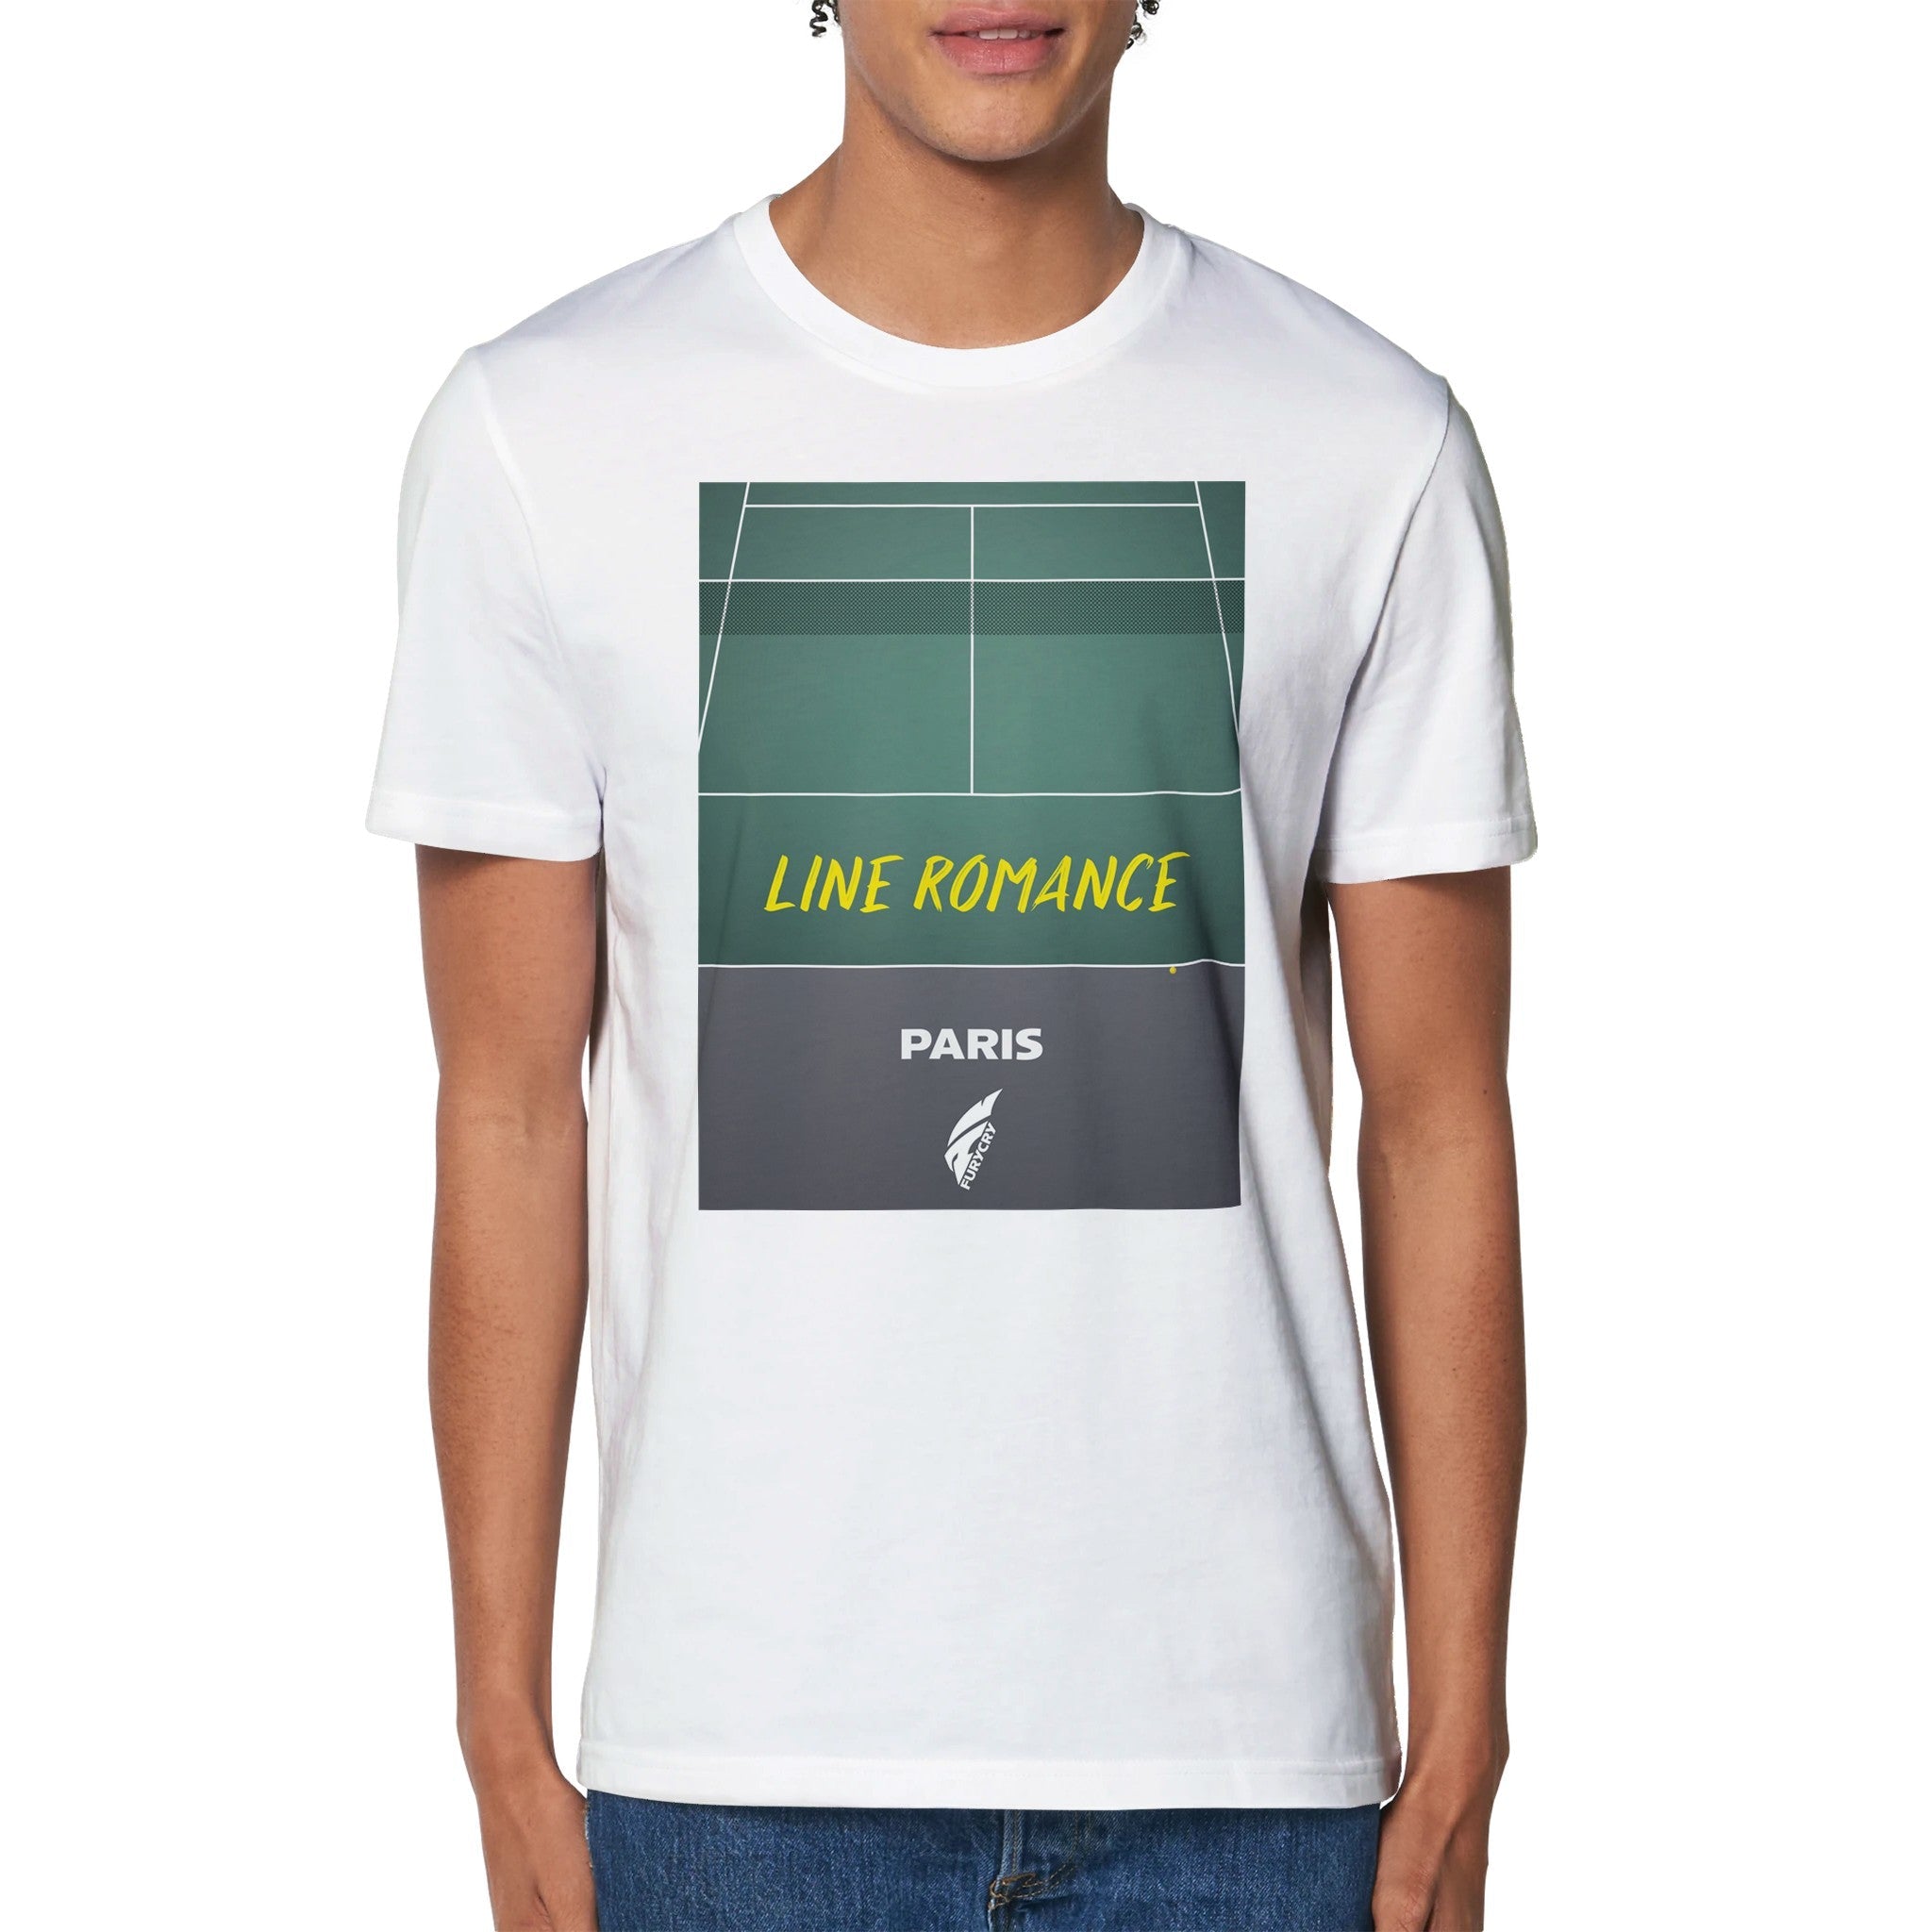 Tennis T-Shirt Line Romance Paris - FURYCRY® | Tennis & Streetwear Apparel